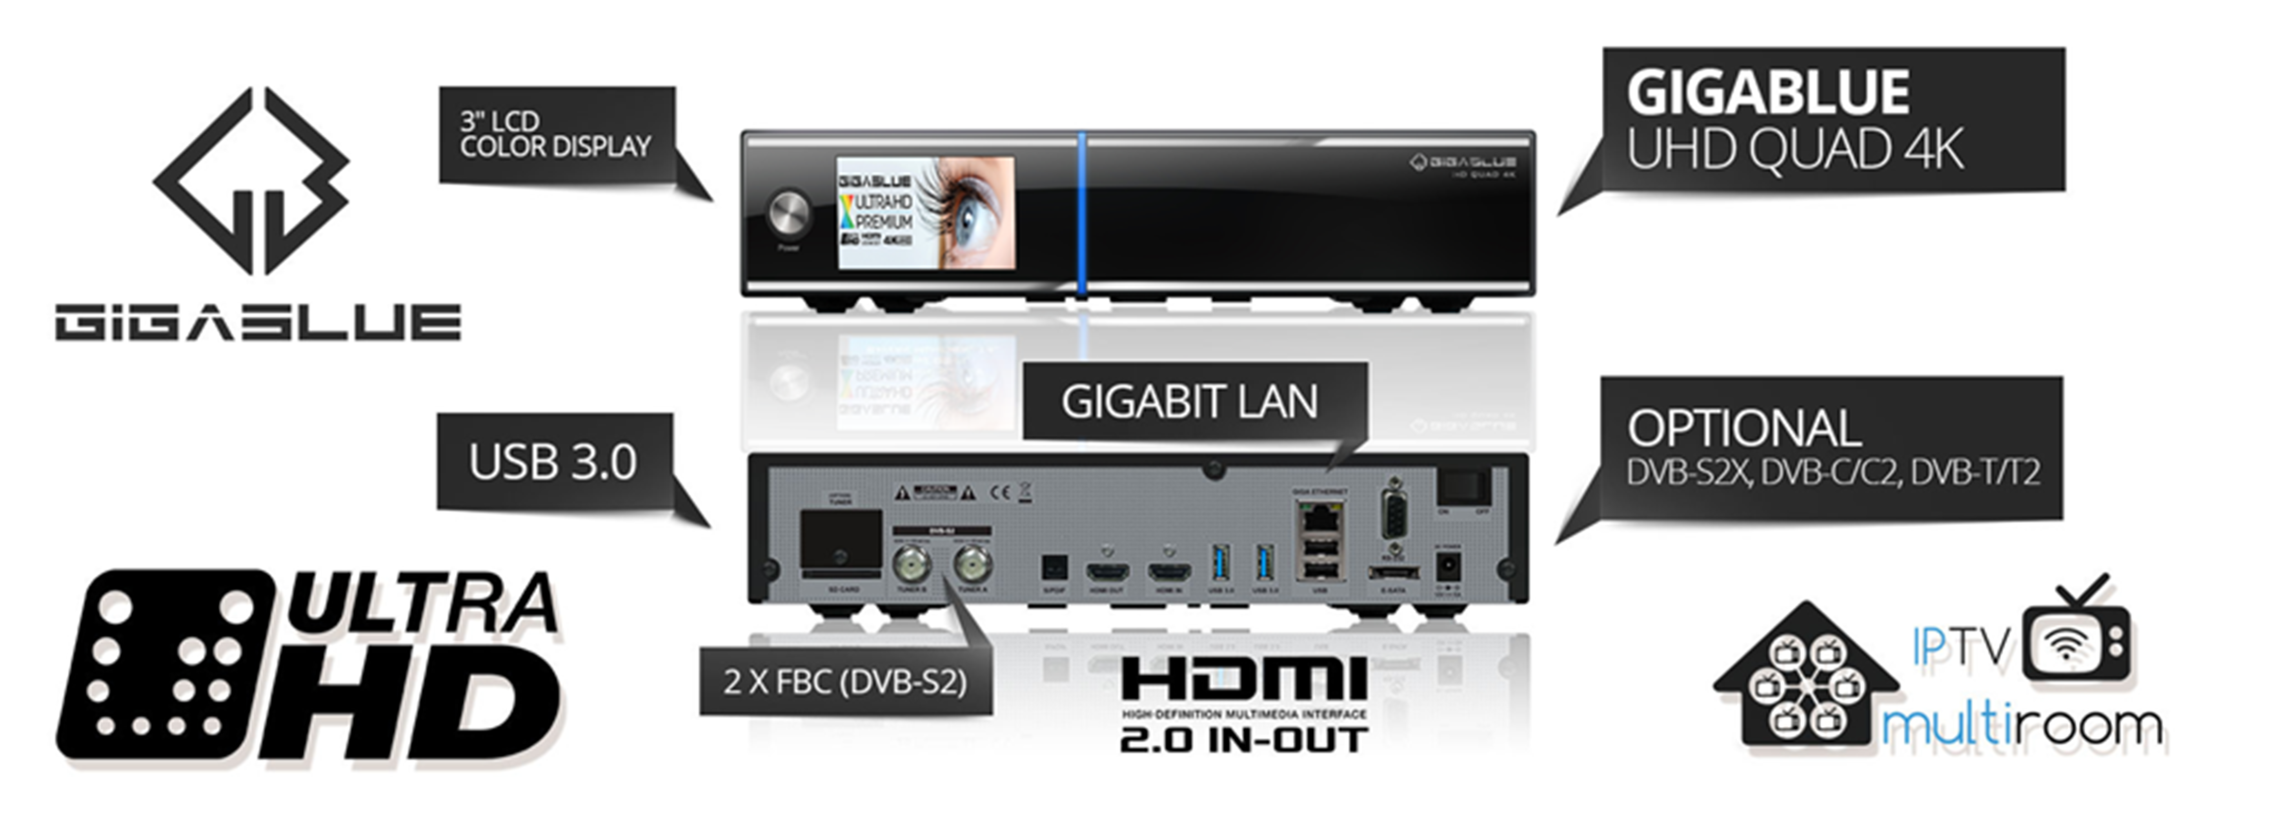 GigaBlue UHD Quad 4K 2xDVB-S2 FBC  E2 Linux Receiver UHD 4K